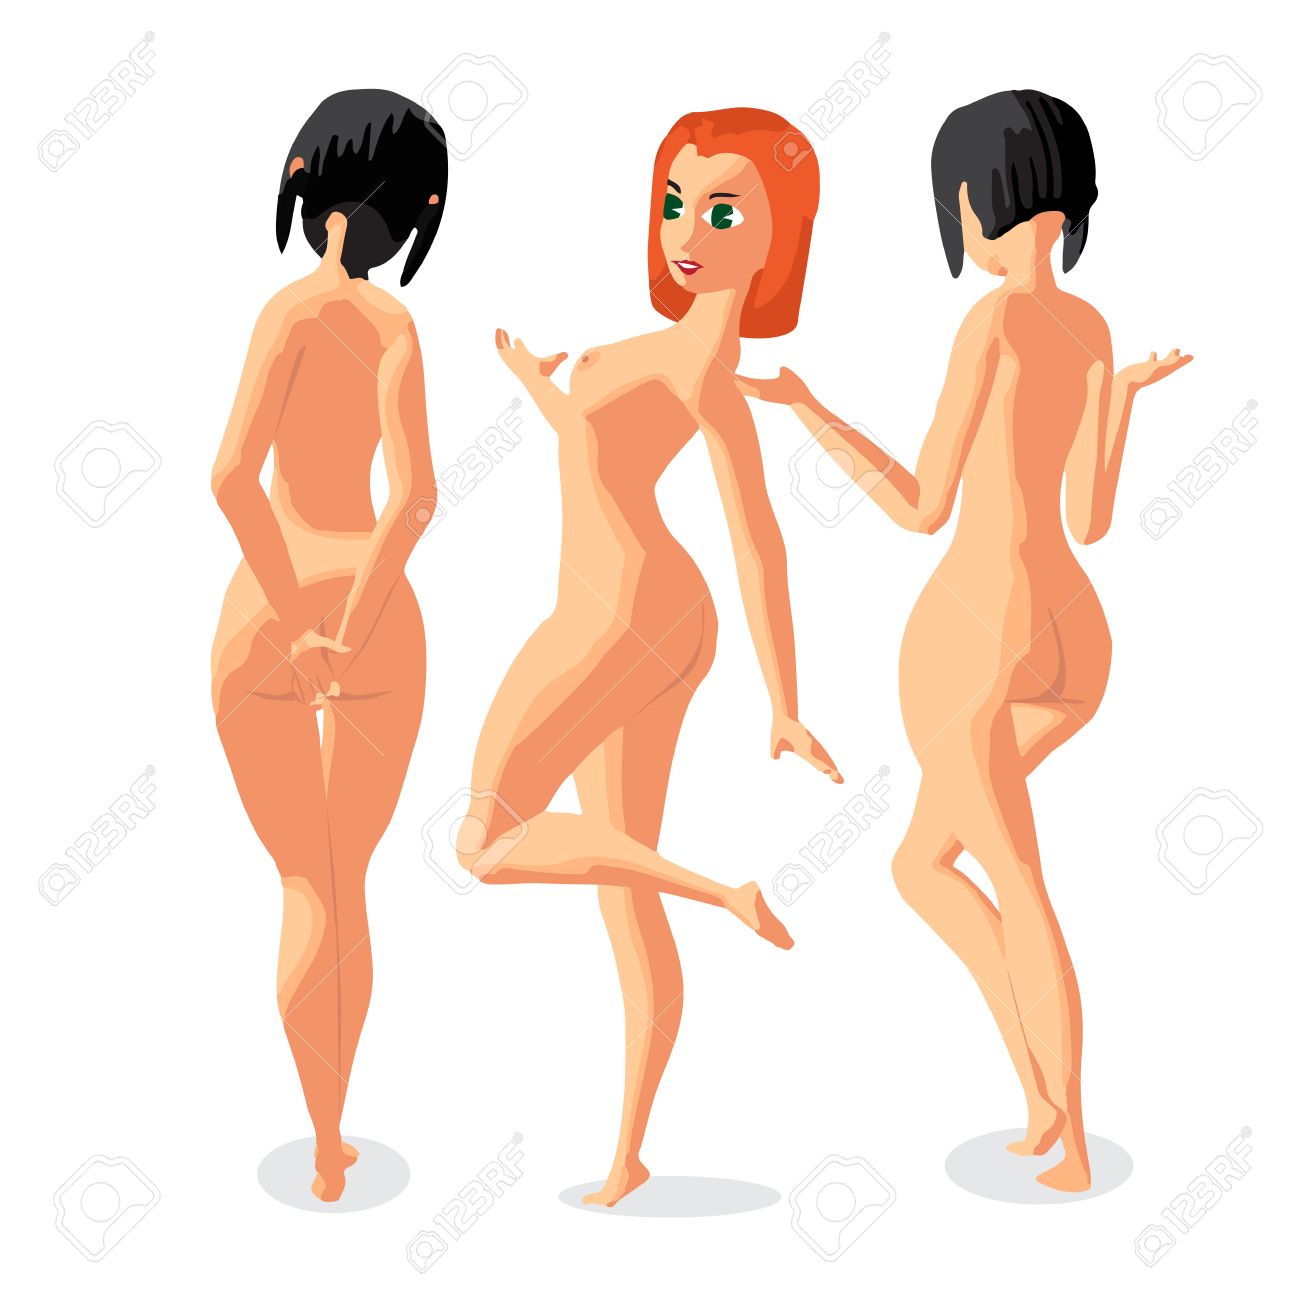 Three girls nude beach